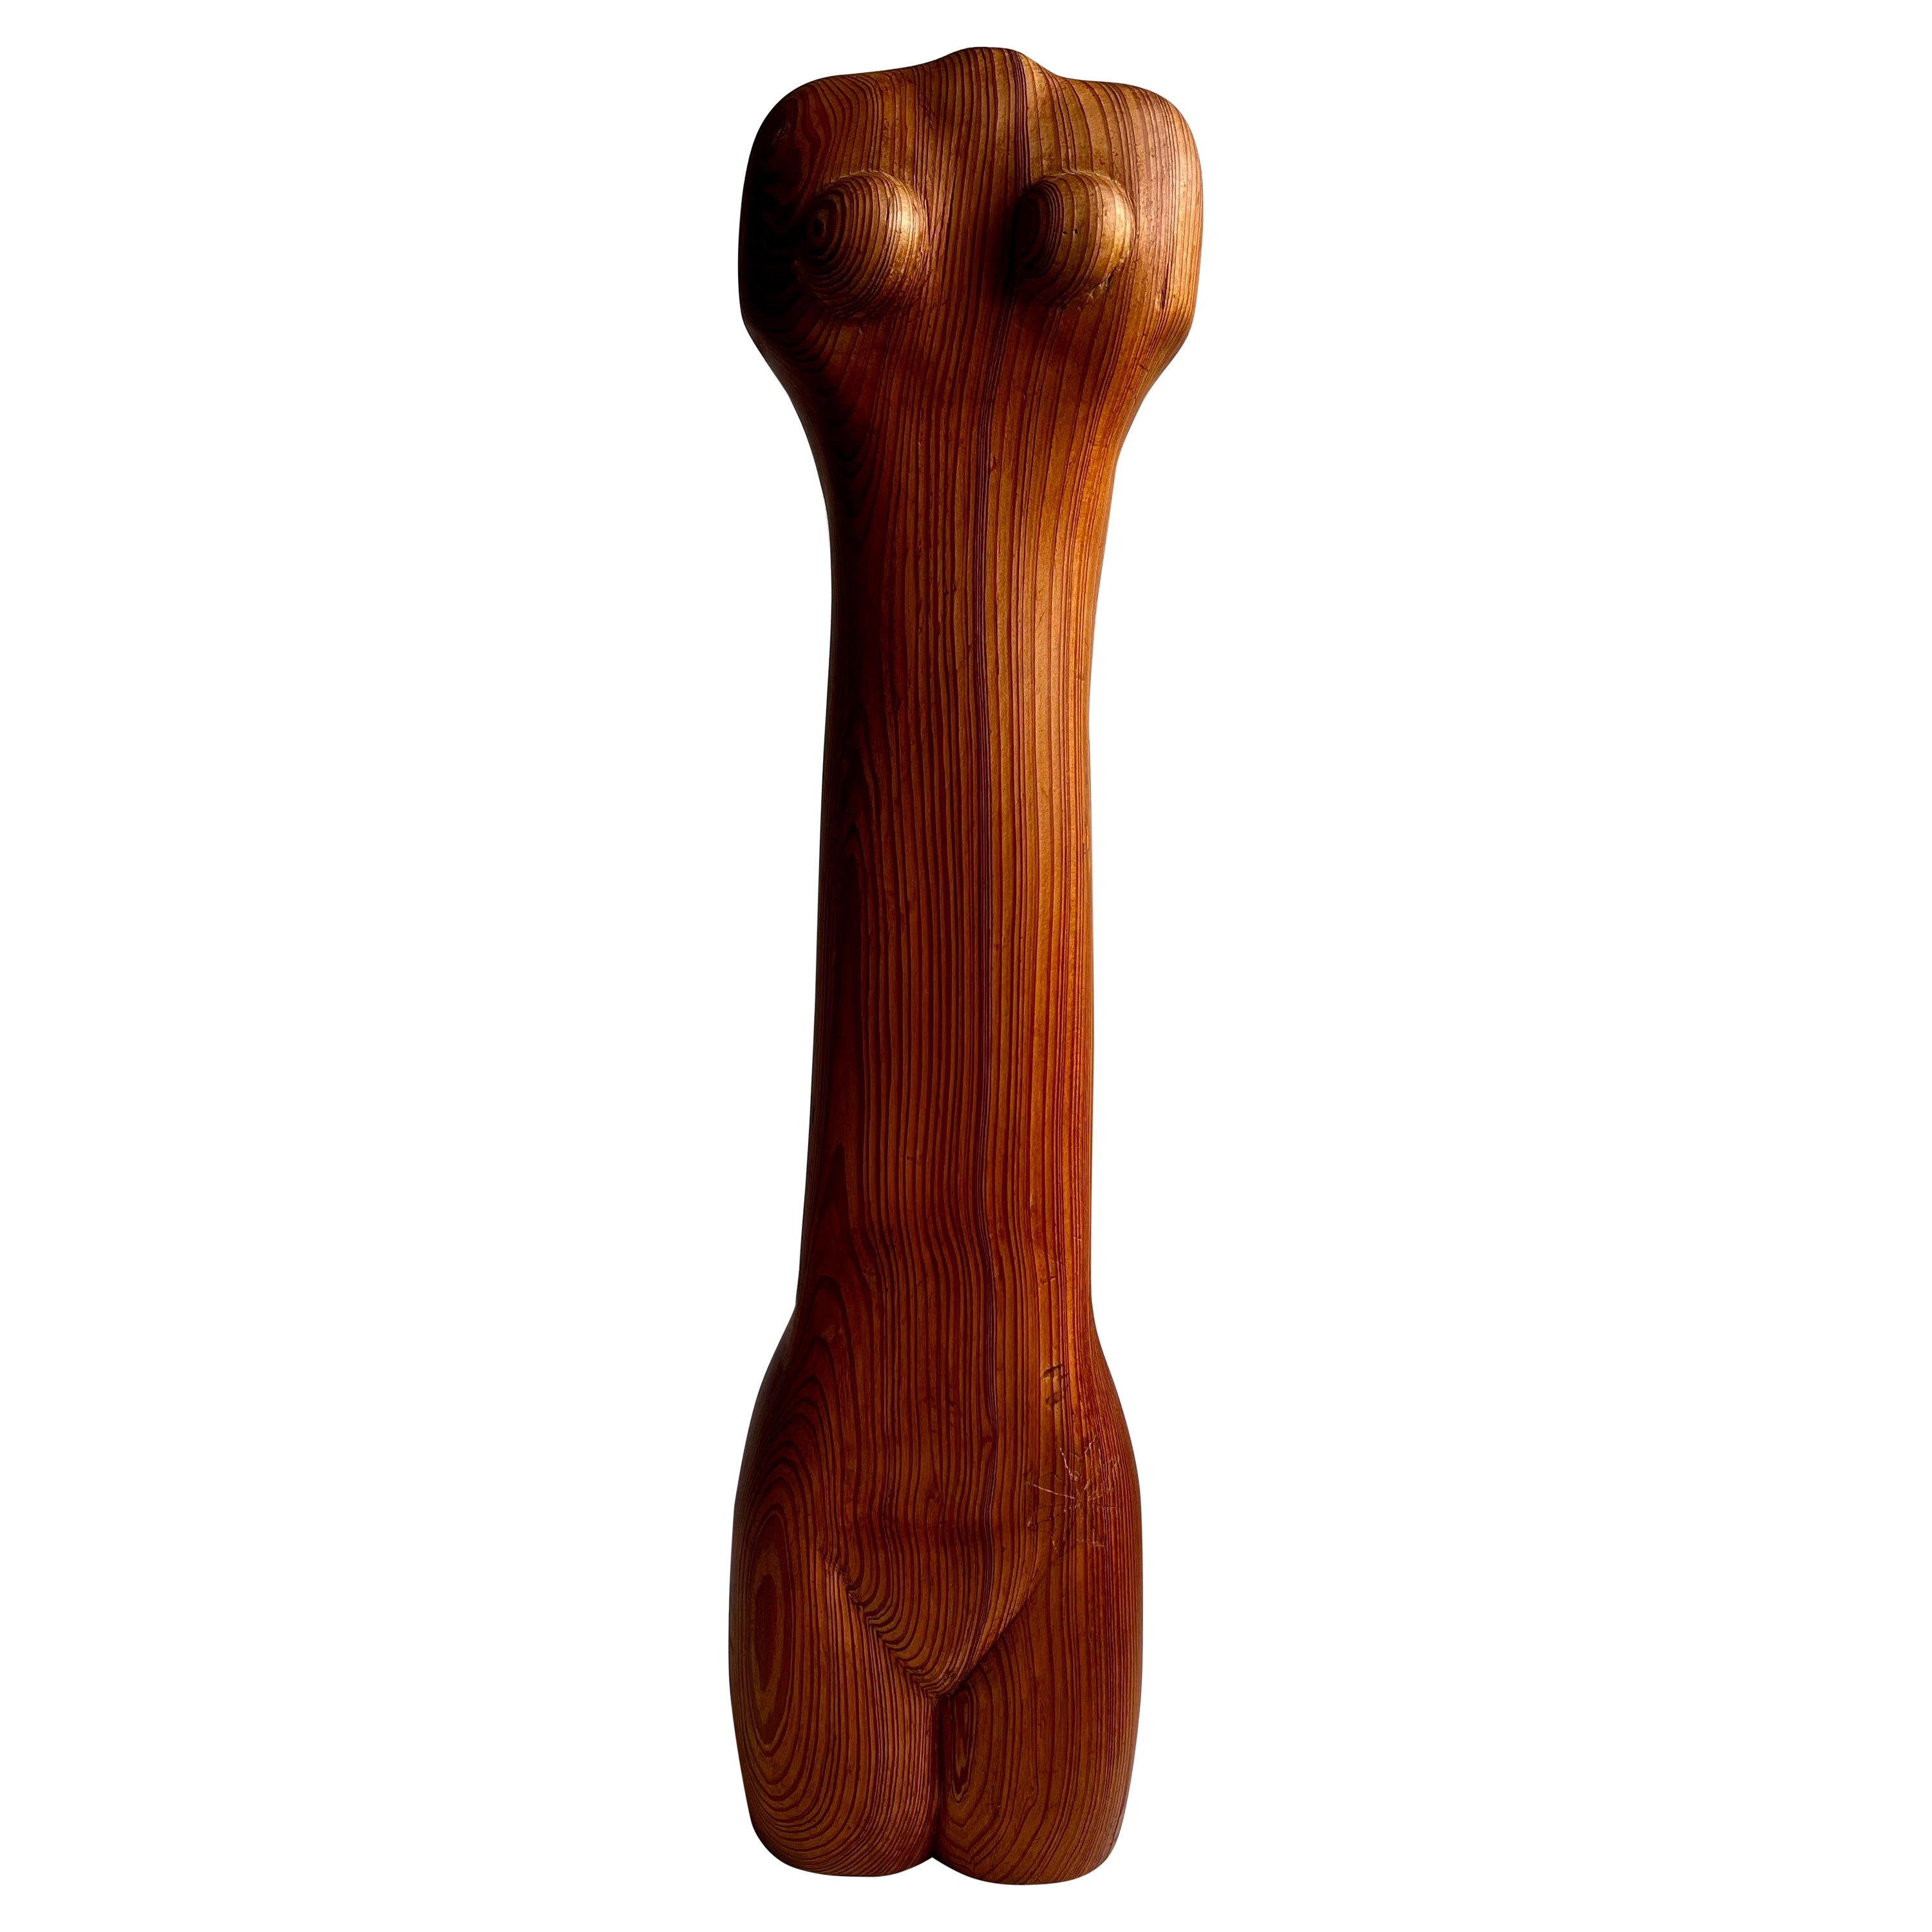 Primitive Modernist Wood Sculpture of Female Nude